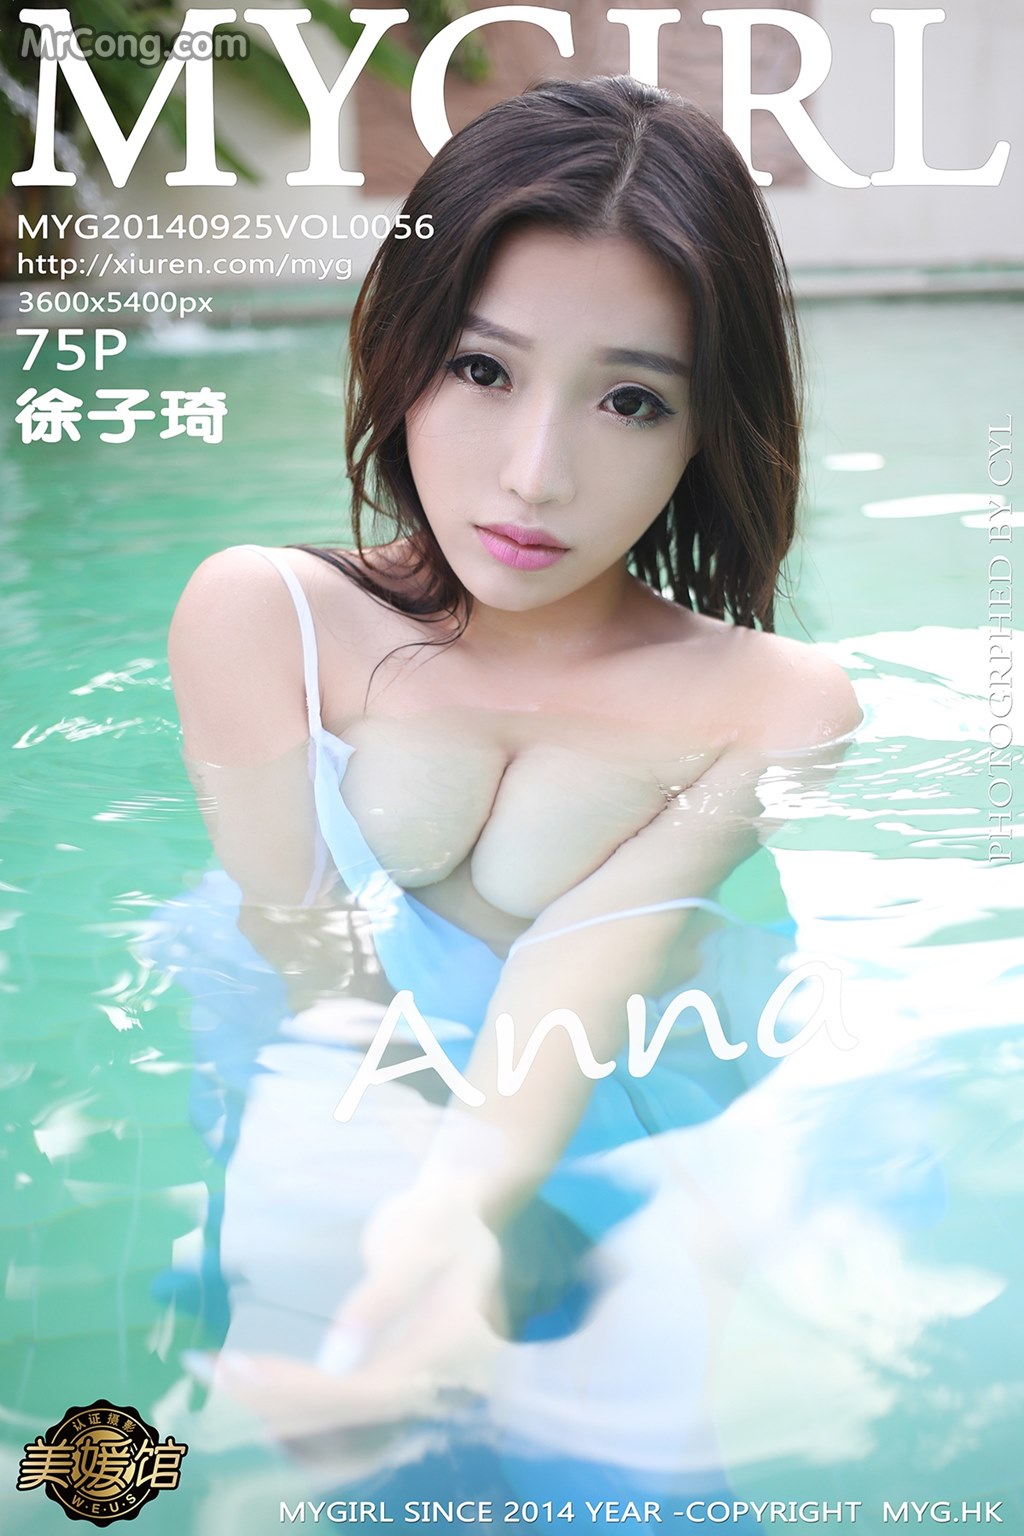 MyGirl Vol.056: Anna (徐子琦) Model (76 pictures)